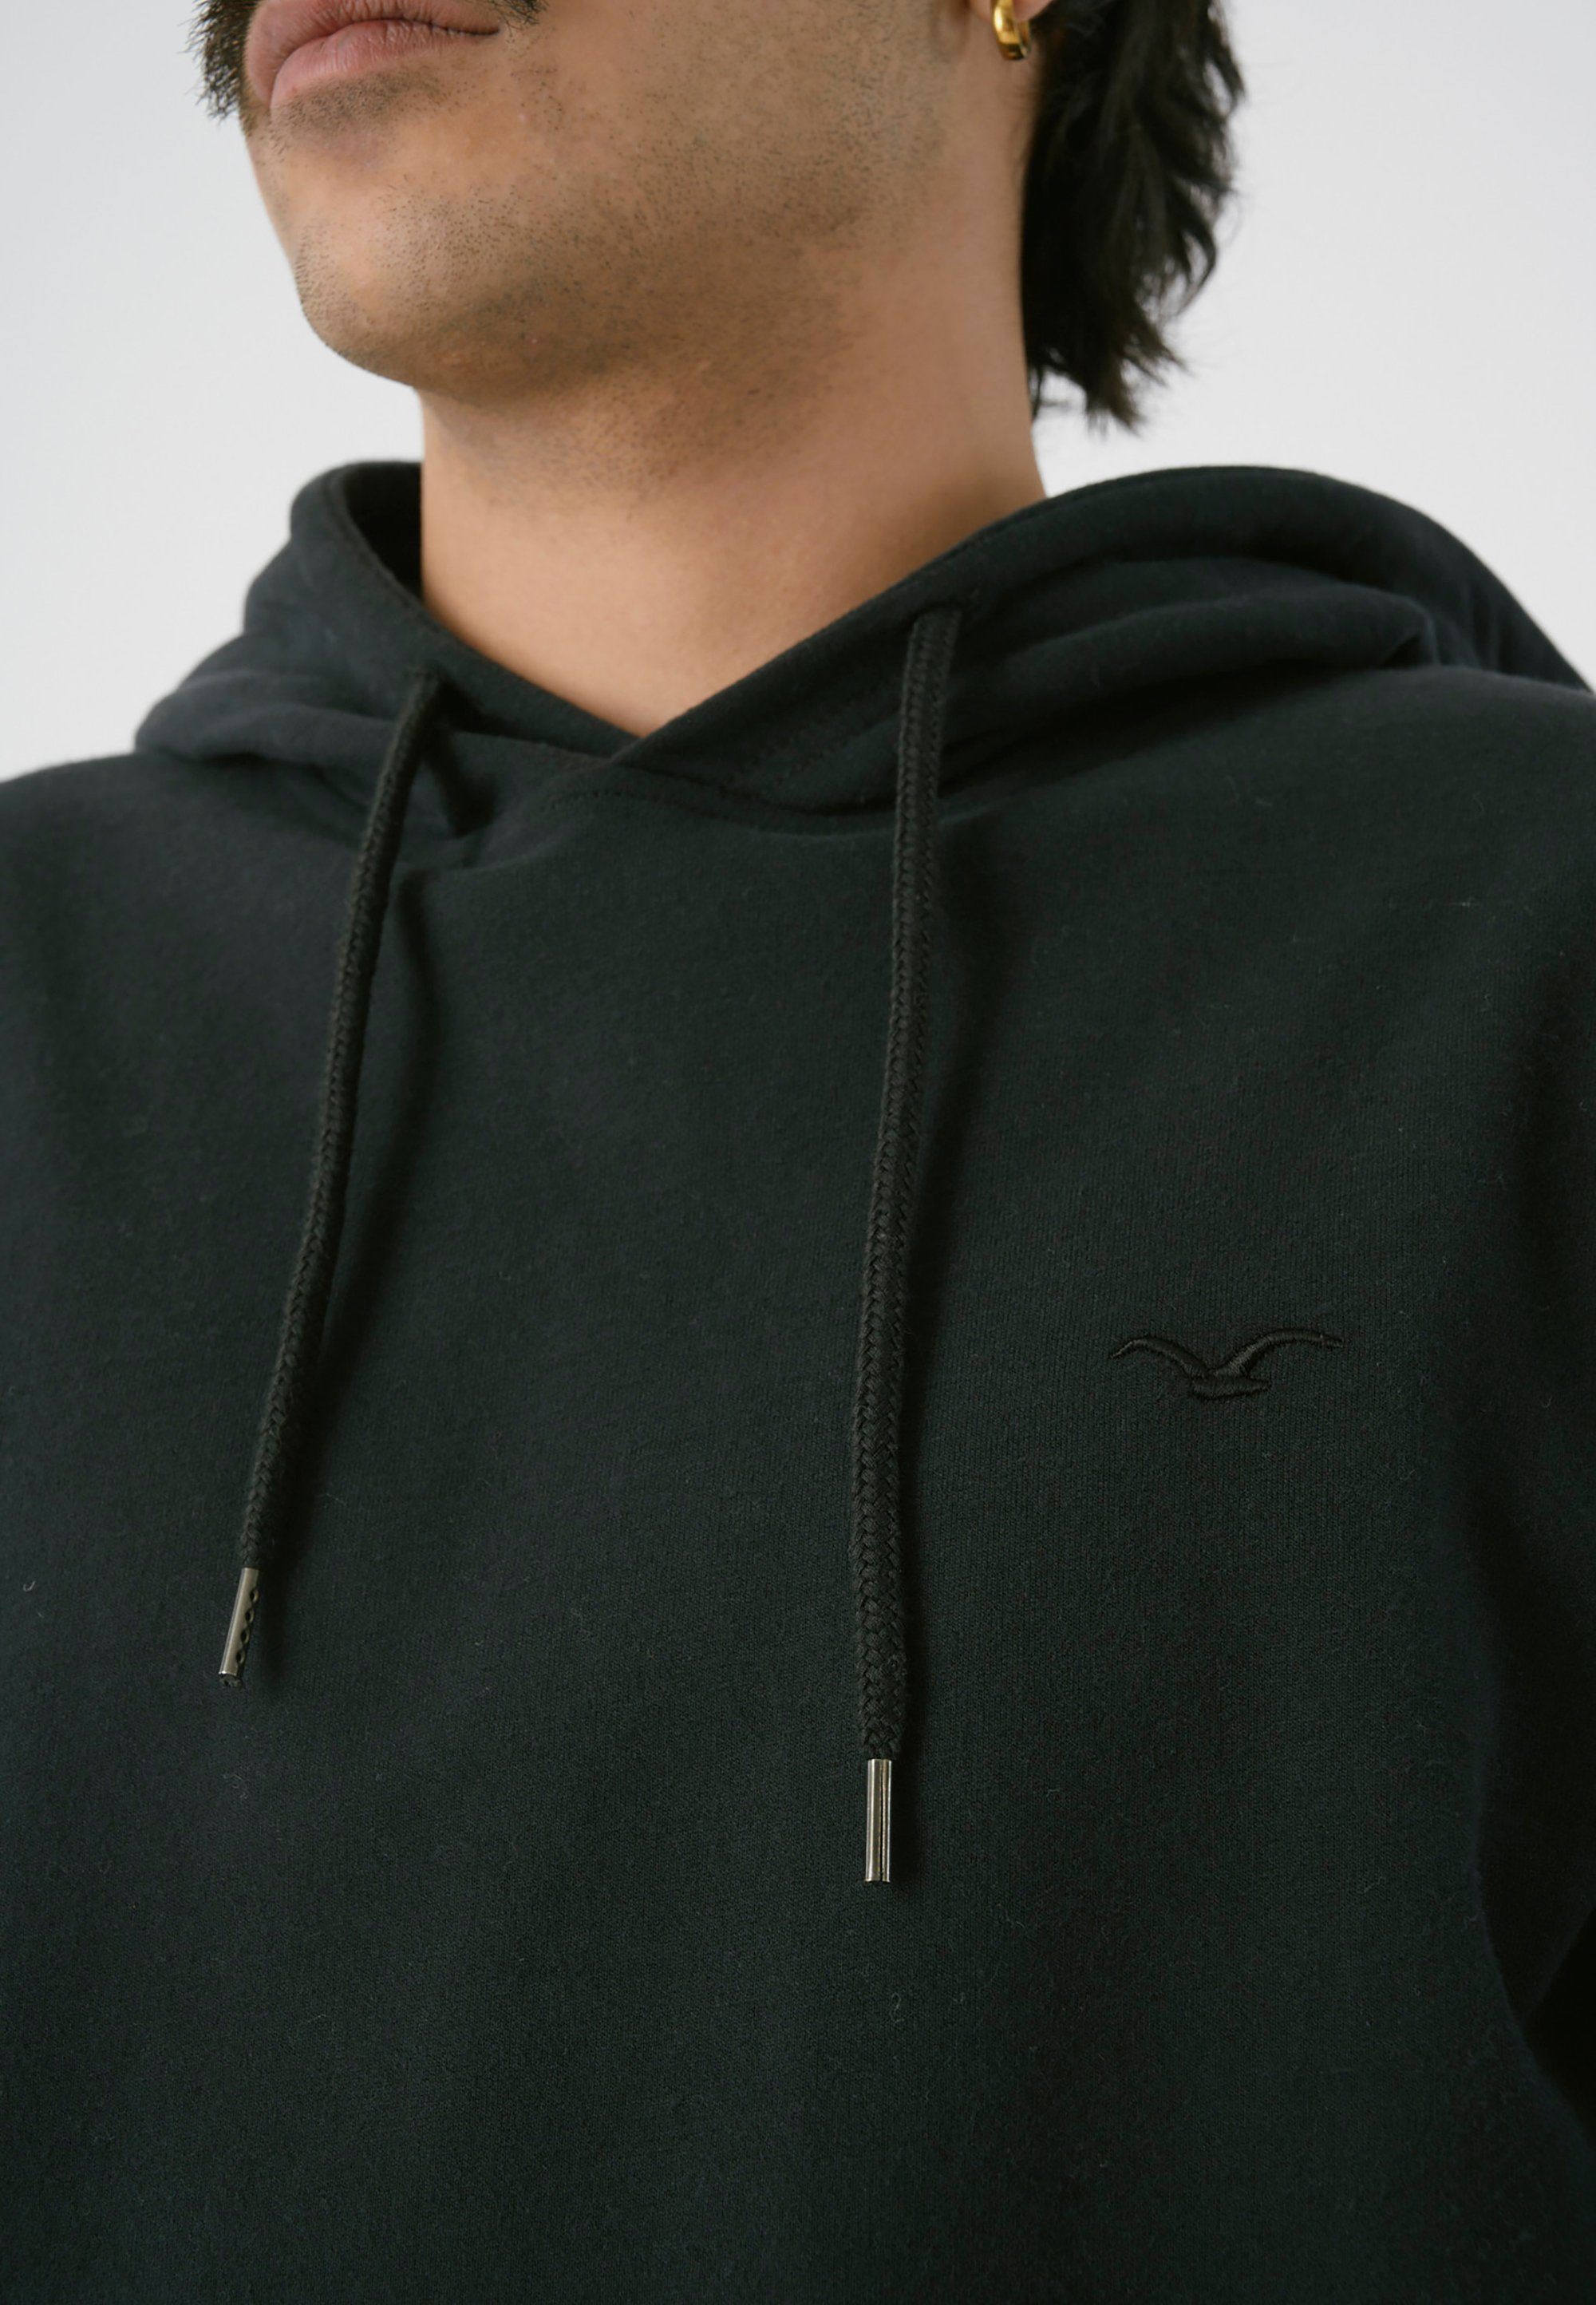 Cleptomanicx schwarz Schnitt mit lockerem Kapuzensweatshirt Ligull